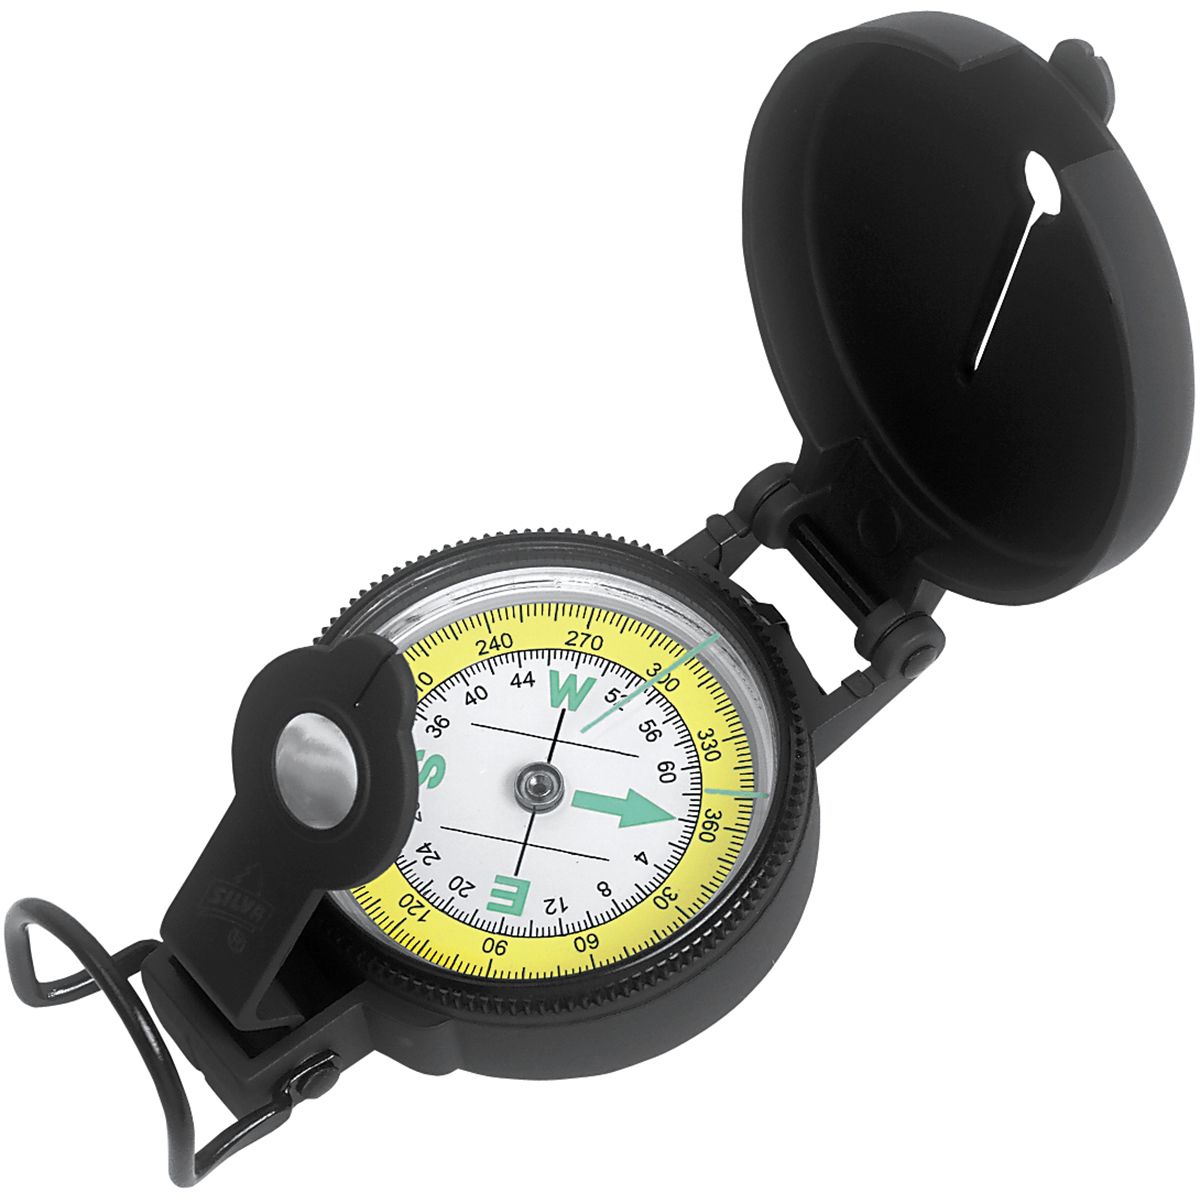 Silva Lensatic Compass